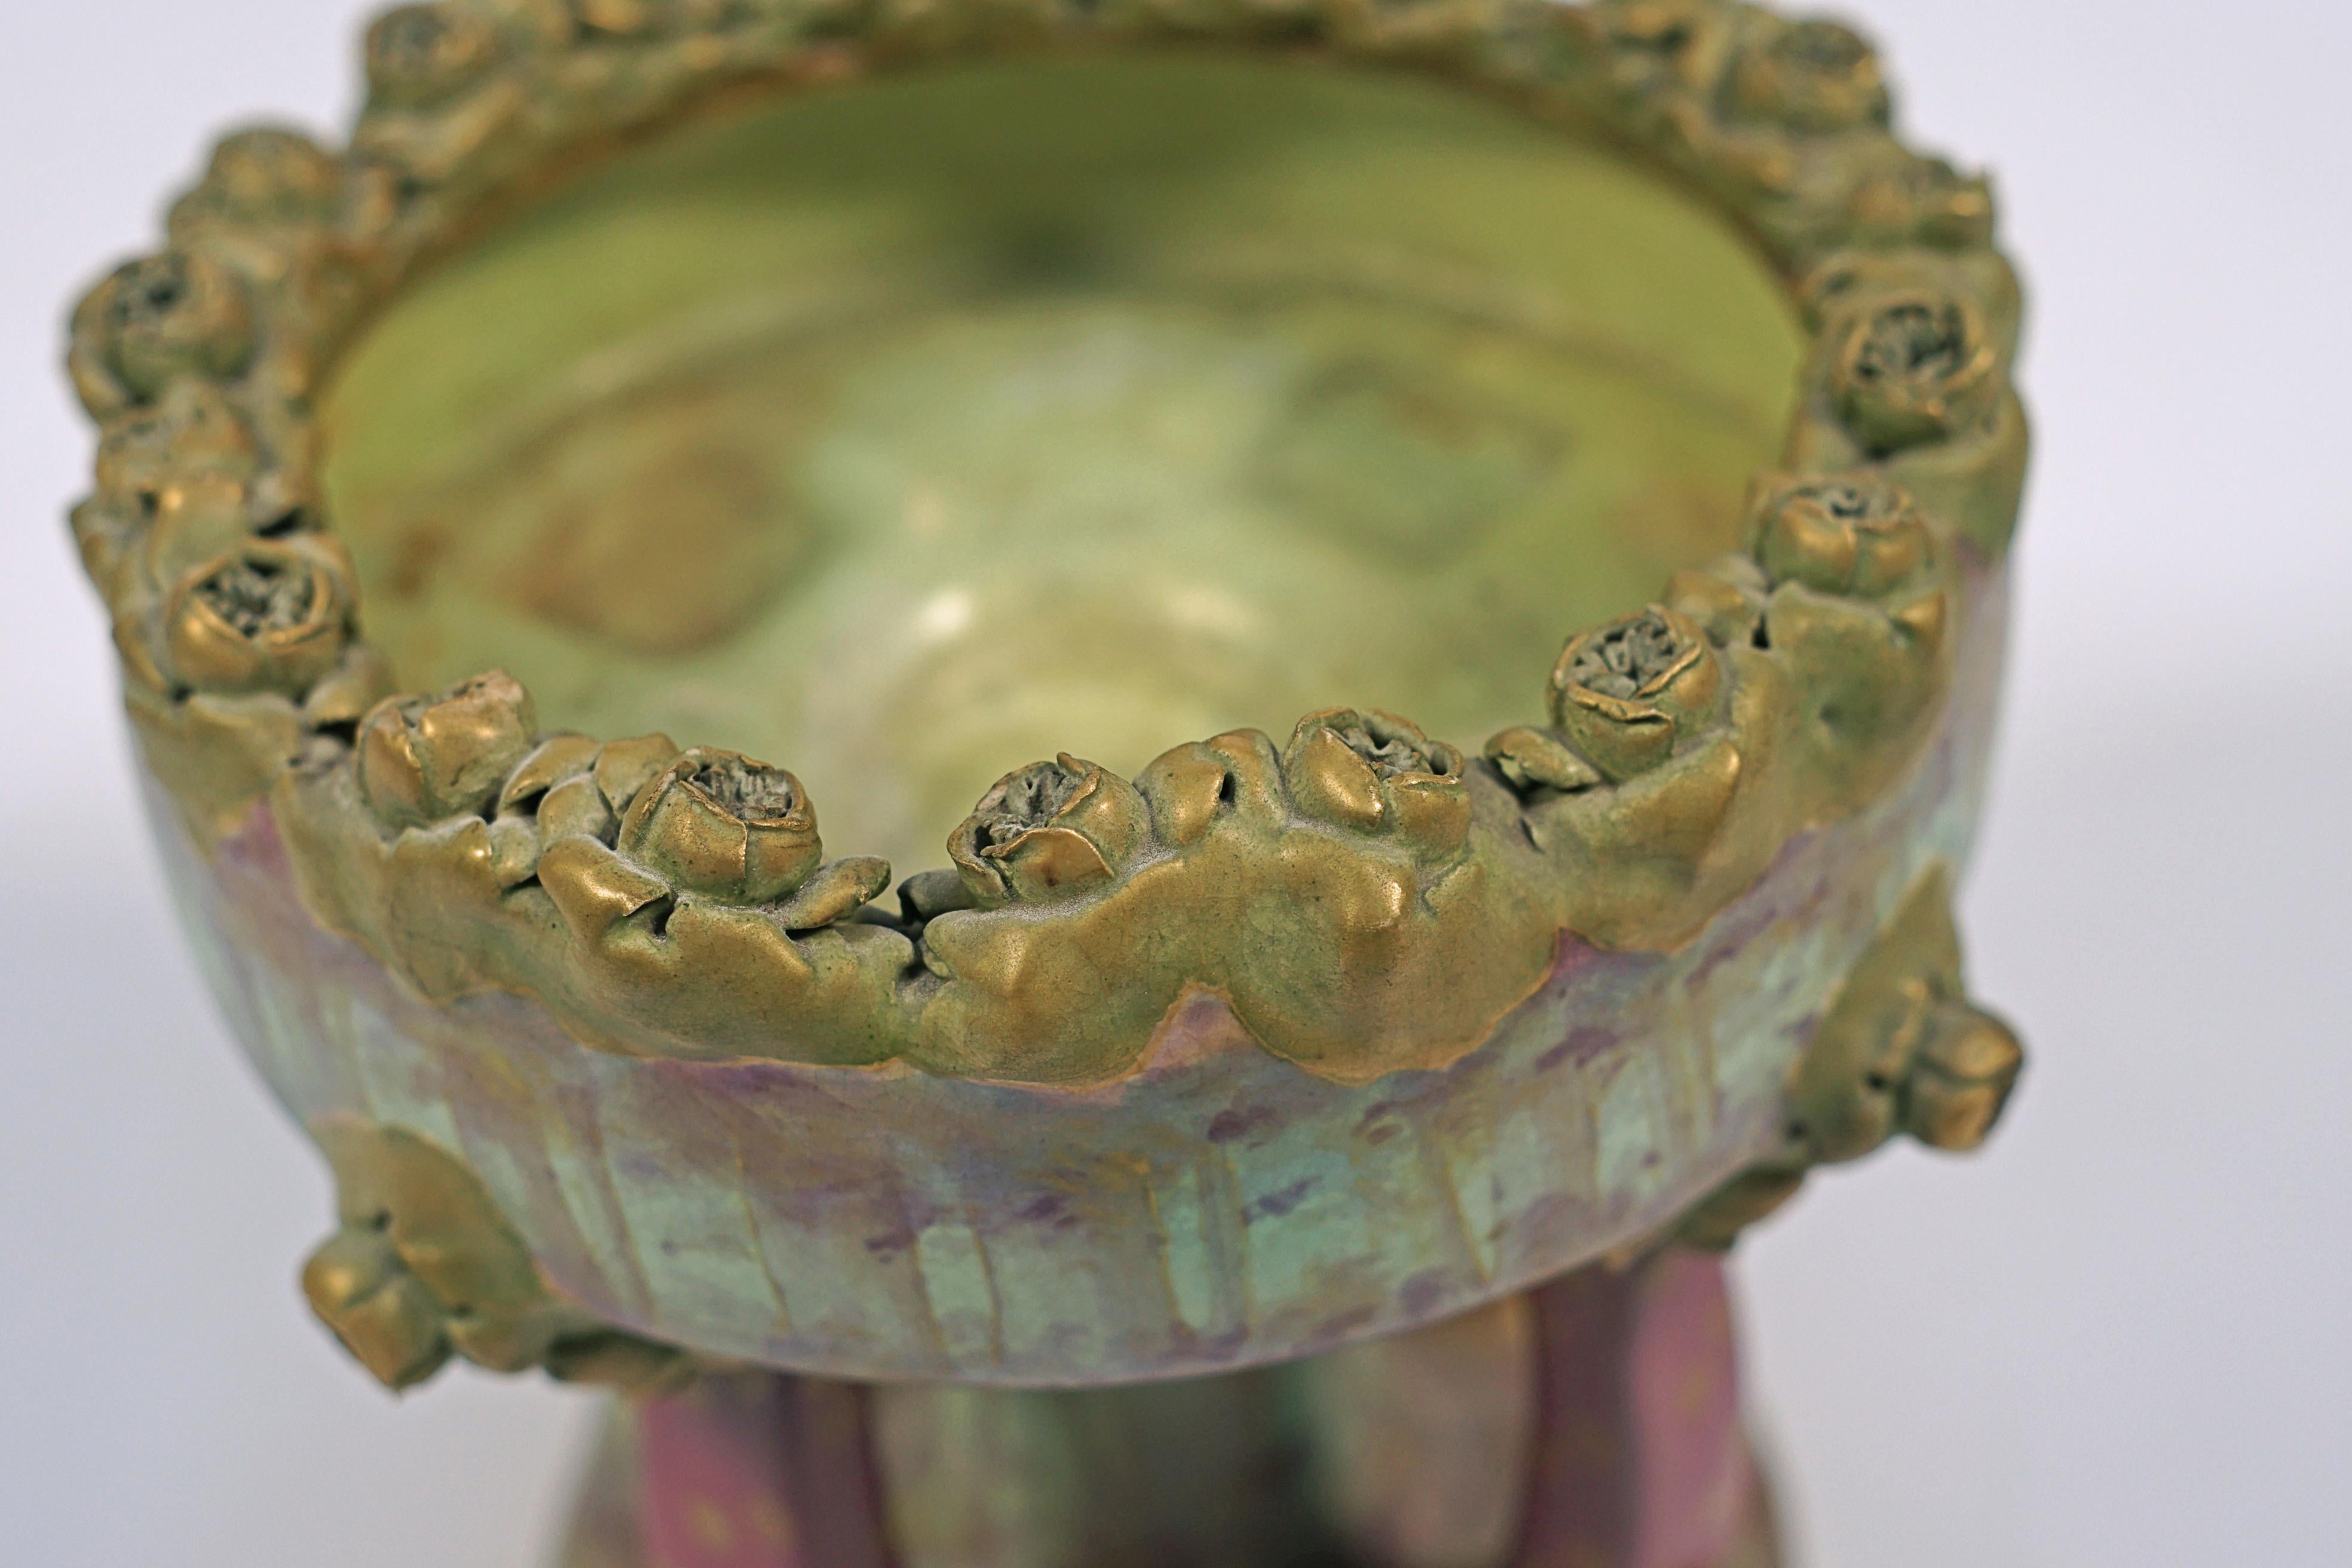 Art Nouveau ceramic fruit bowl stamped with a crown by, AUSTRIA AMPHORA 390042.

Austria, CIRCA 1900.